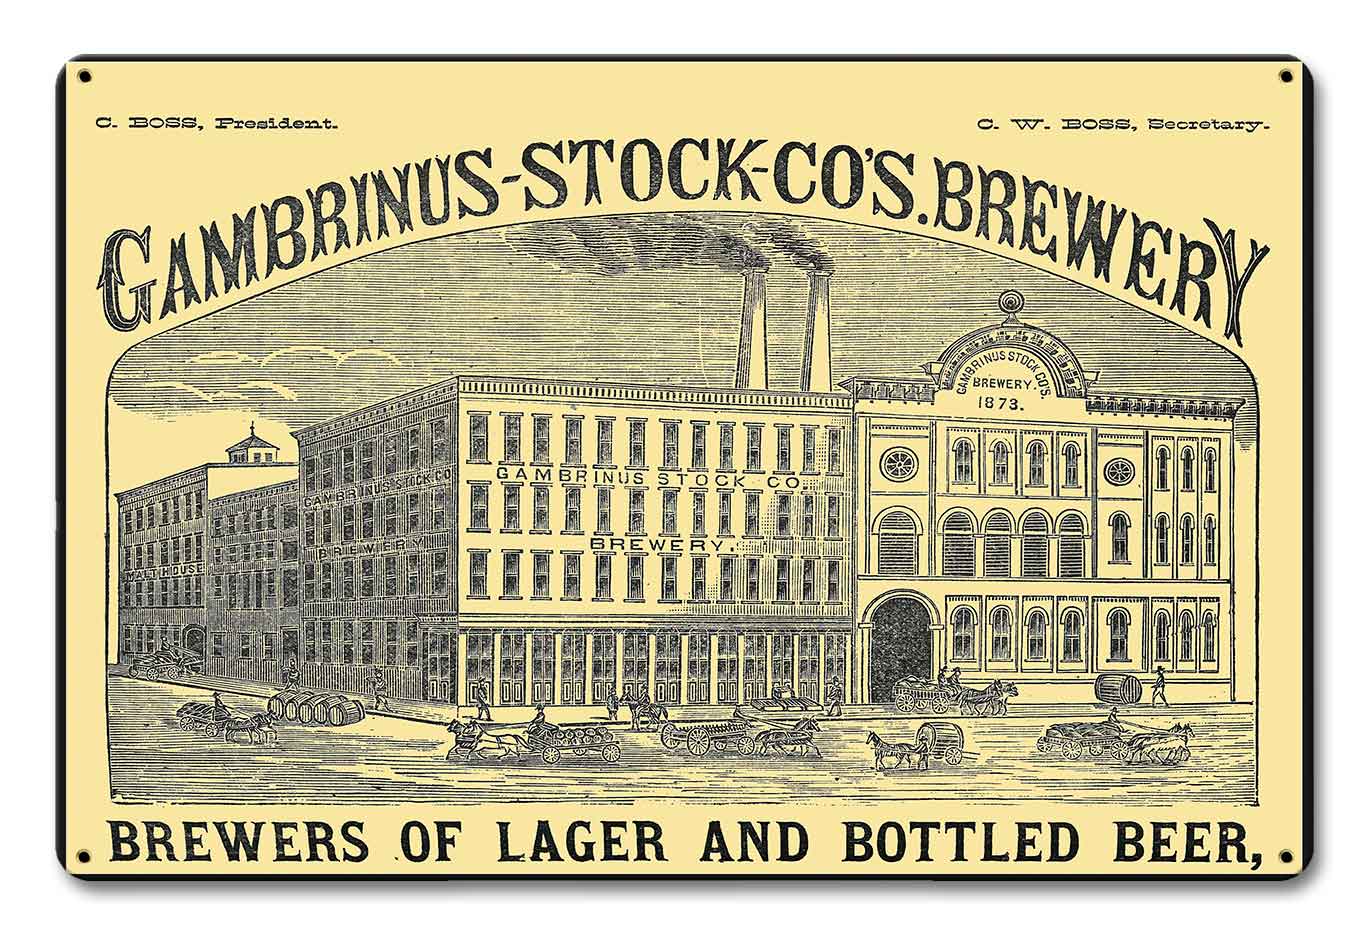 Gambrinus Brewery